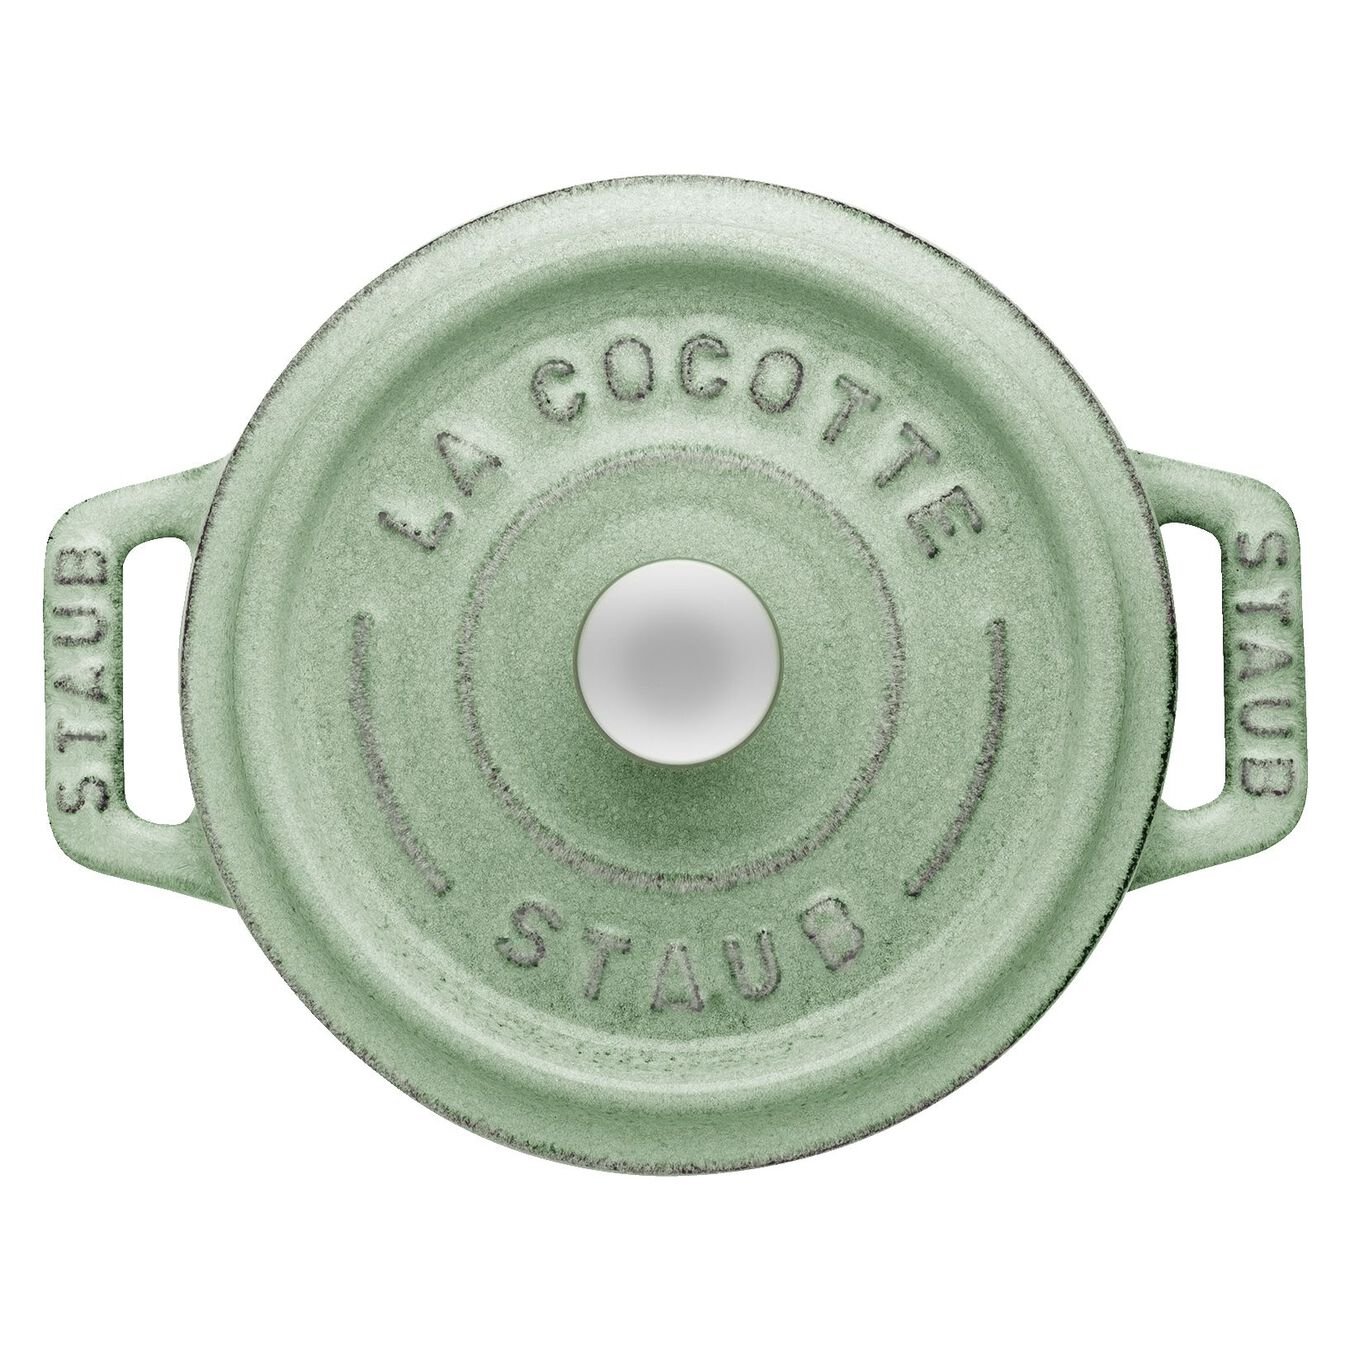 Mini cocotte rotonda - 10 cm, salvia,,large 4